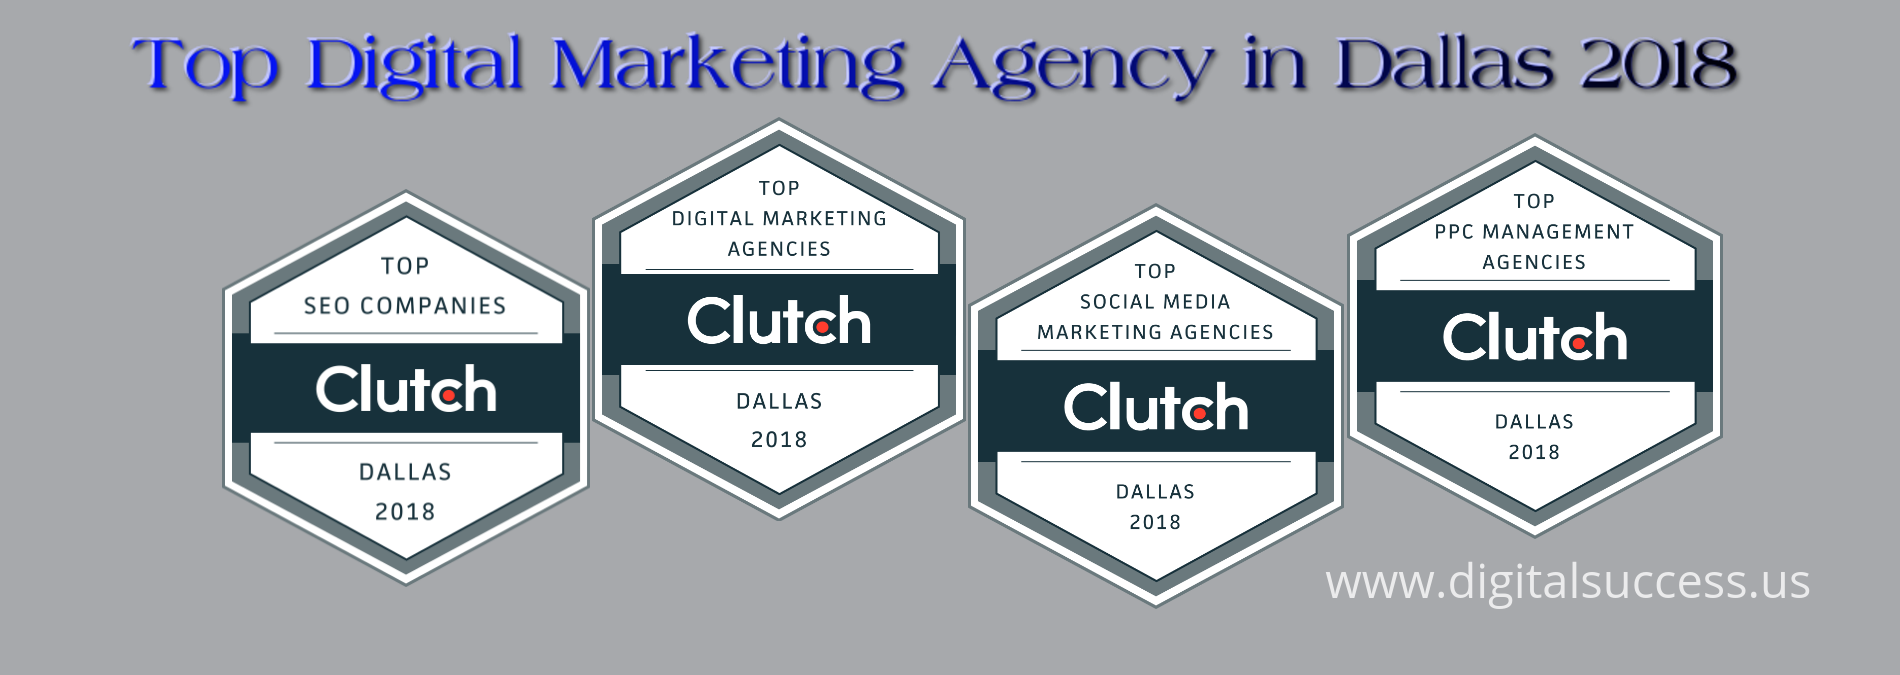 Digital Marketing Agency in Dallas